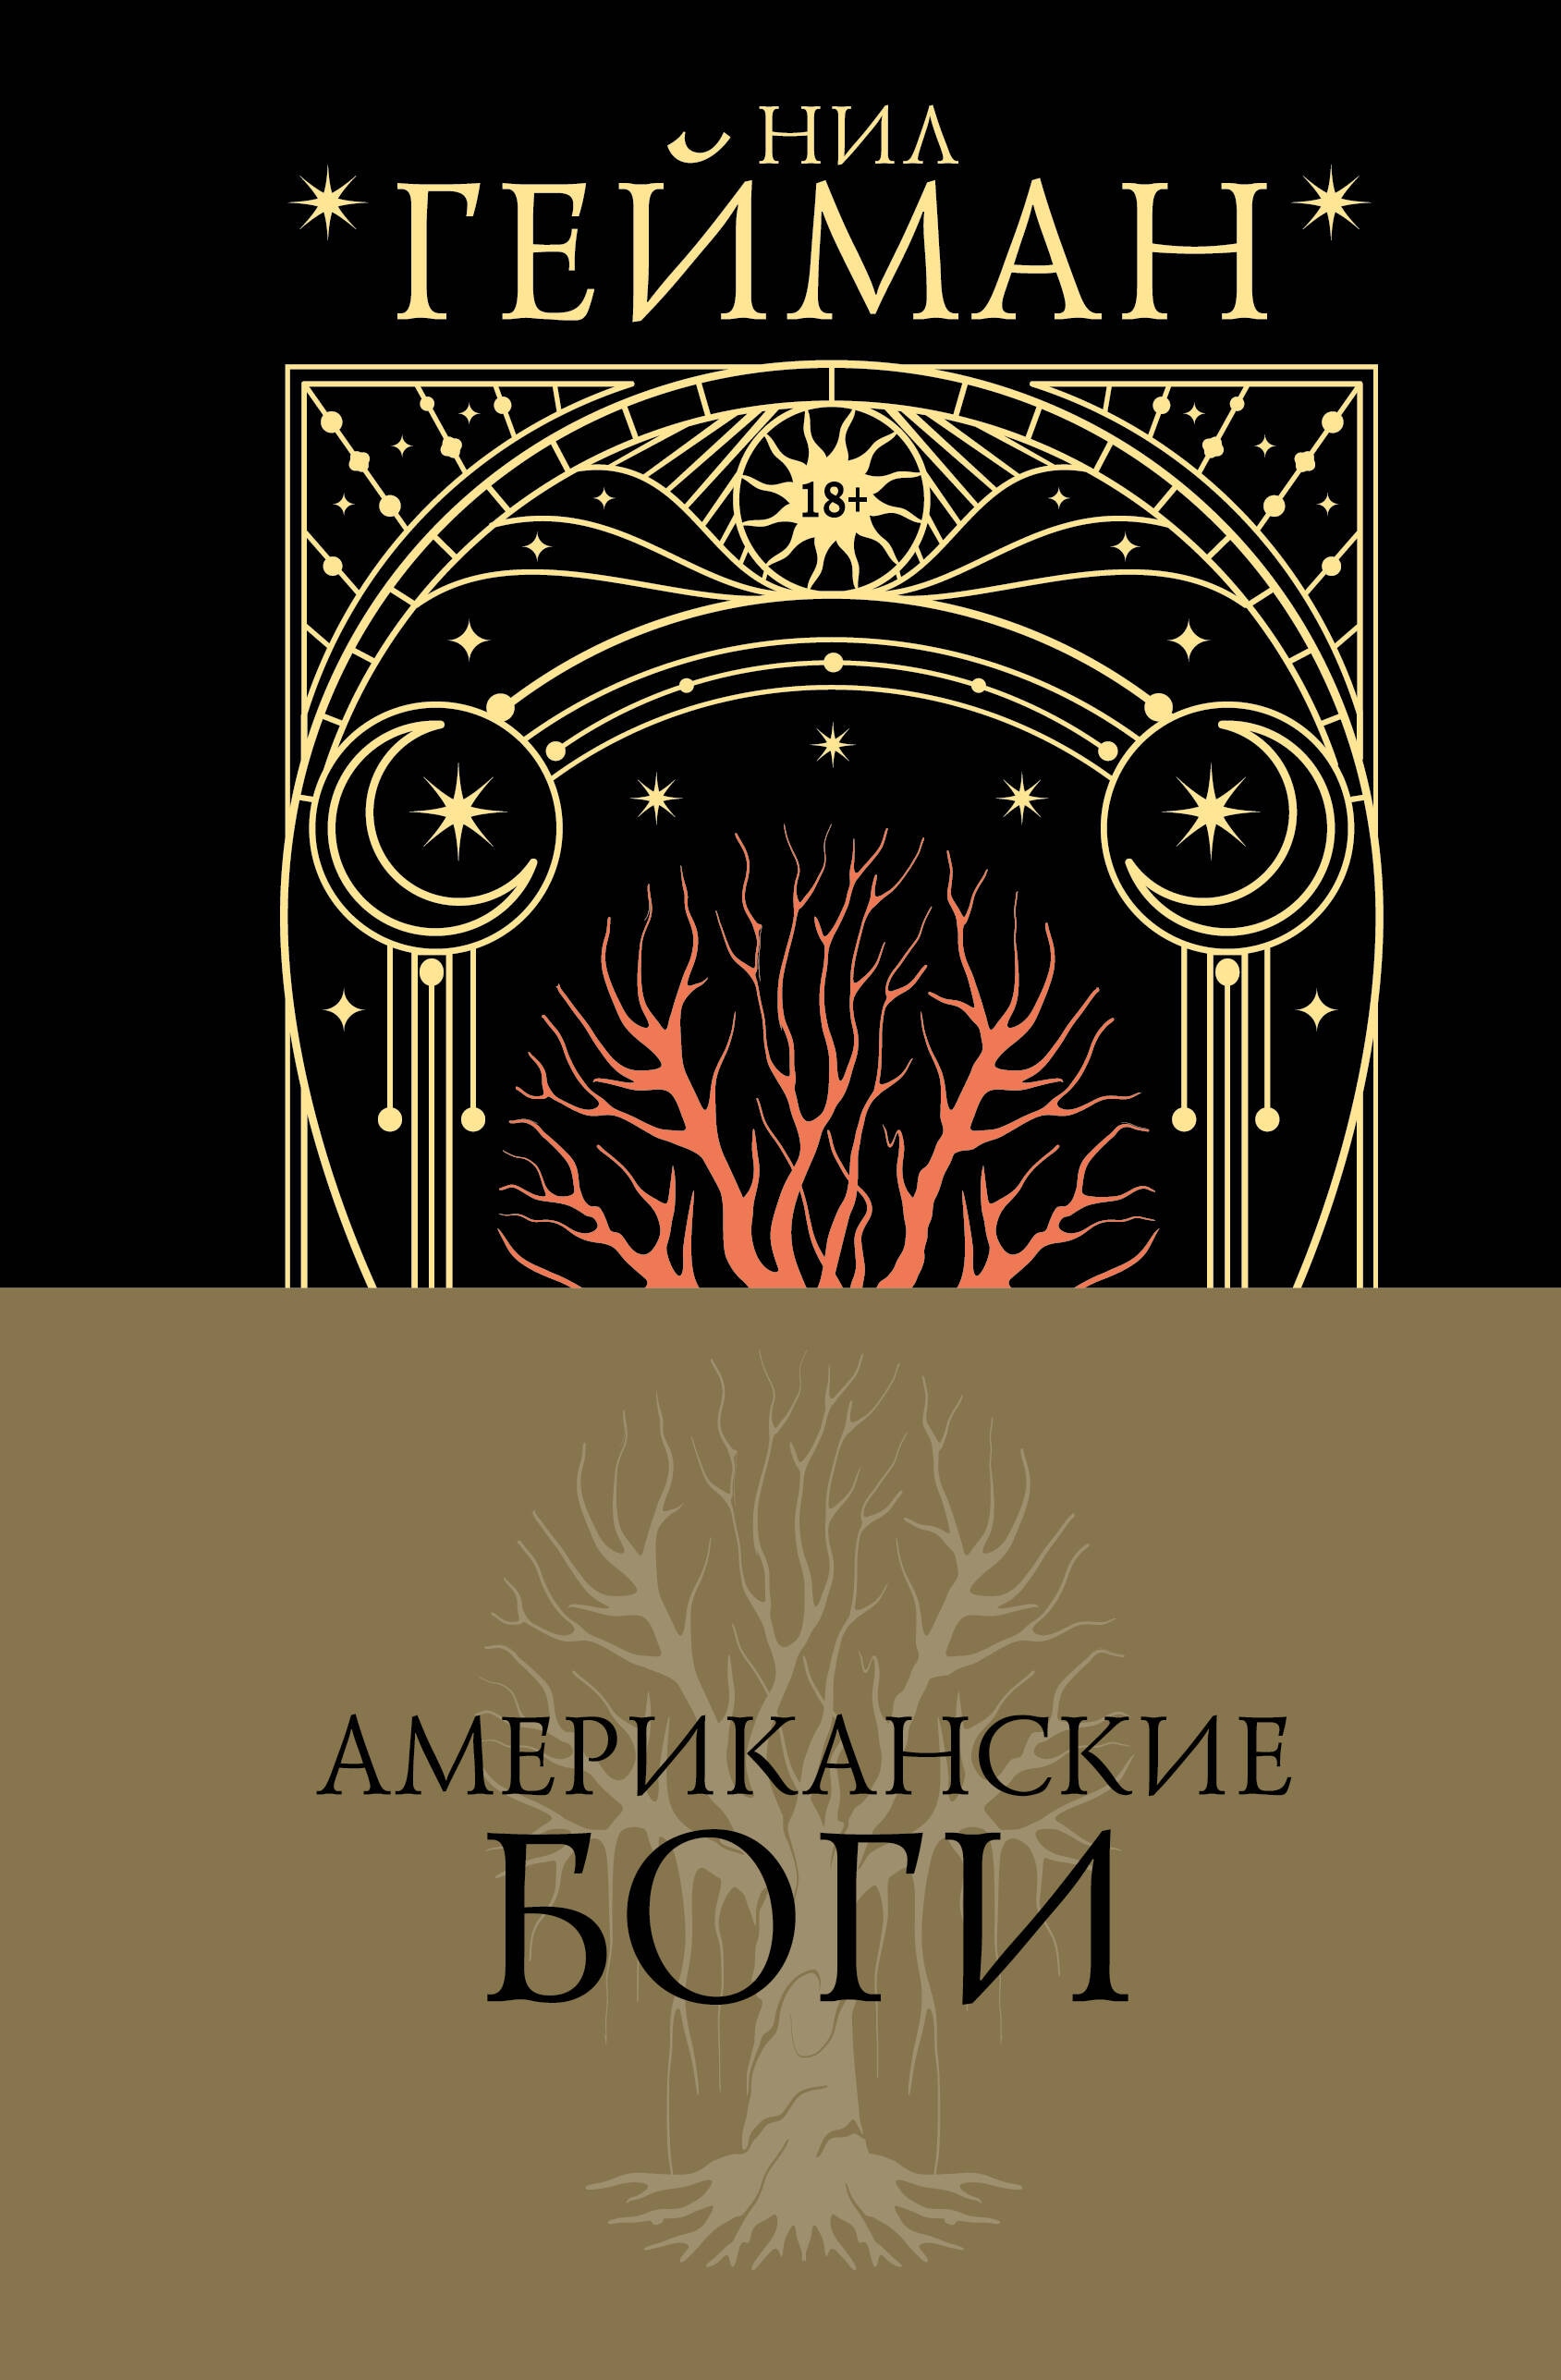 Book “Американские боги” by Нил Гейман — 2024